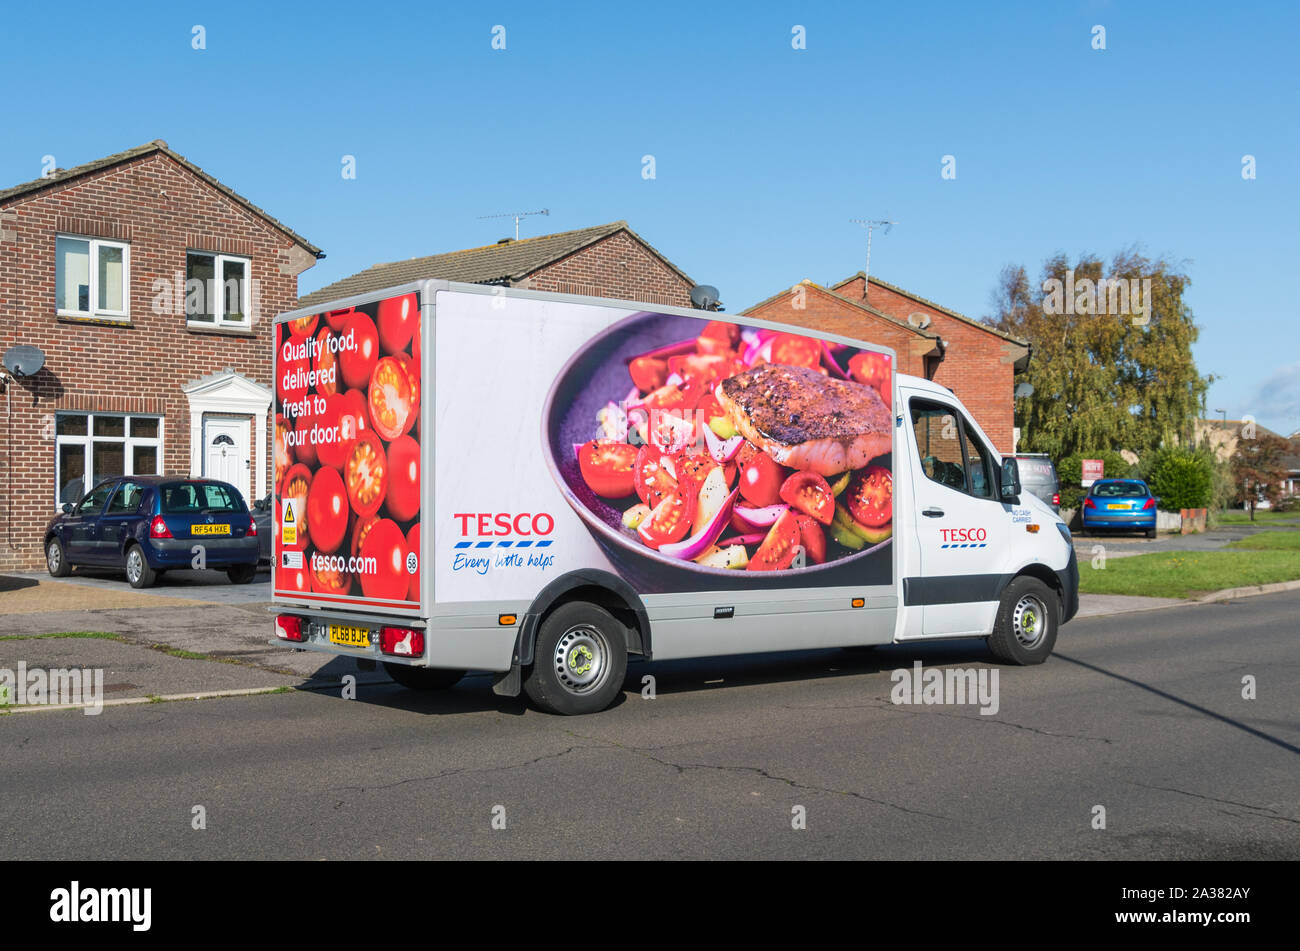 Tesco van liefert Lebensmittel in West Sussex, England, Großbritannien. Tescos Lebensmittelgeschäft Lieferwagen. Stockfoto